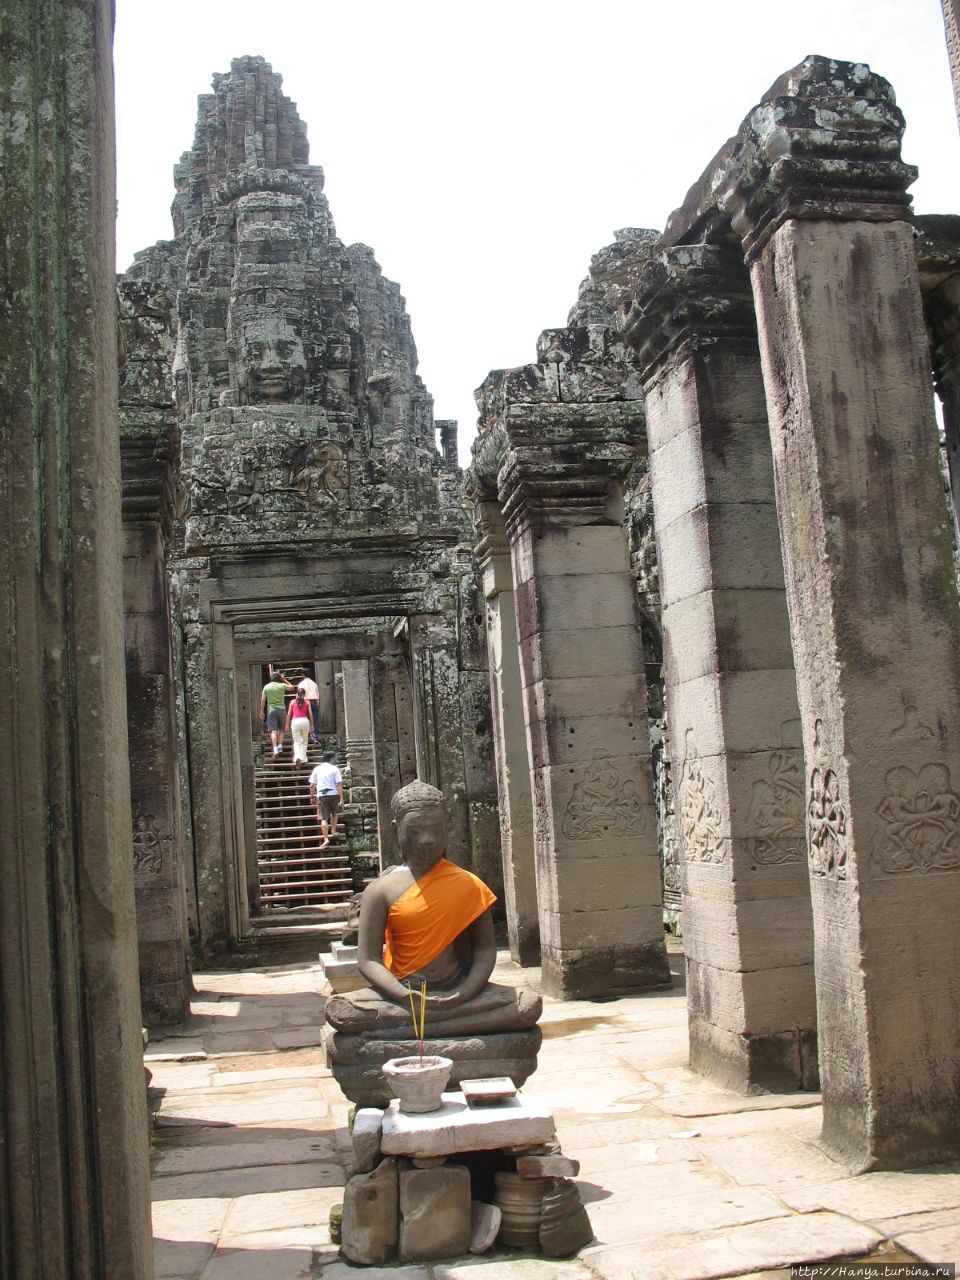 Храм Байон Ангкор (столица государства кхмеров), Камбоджа